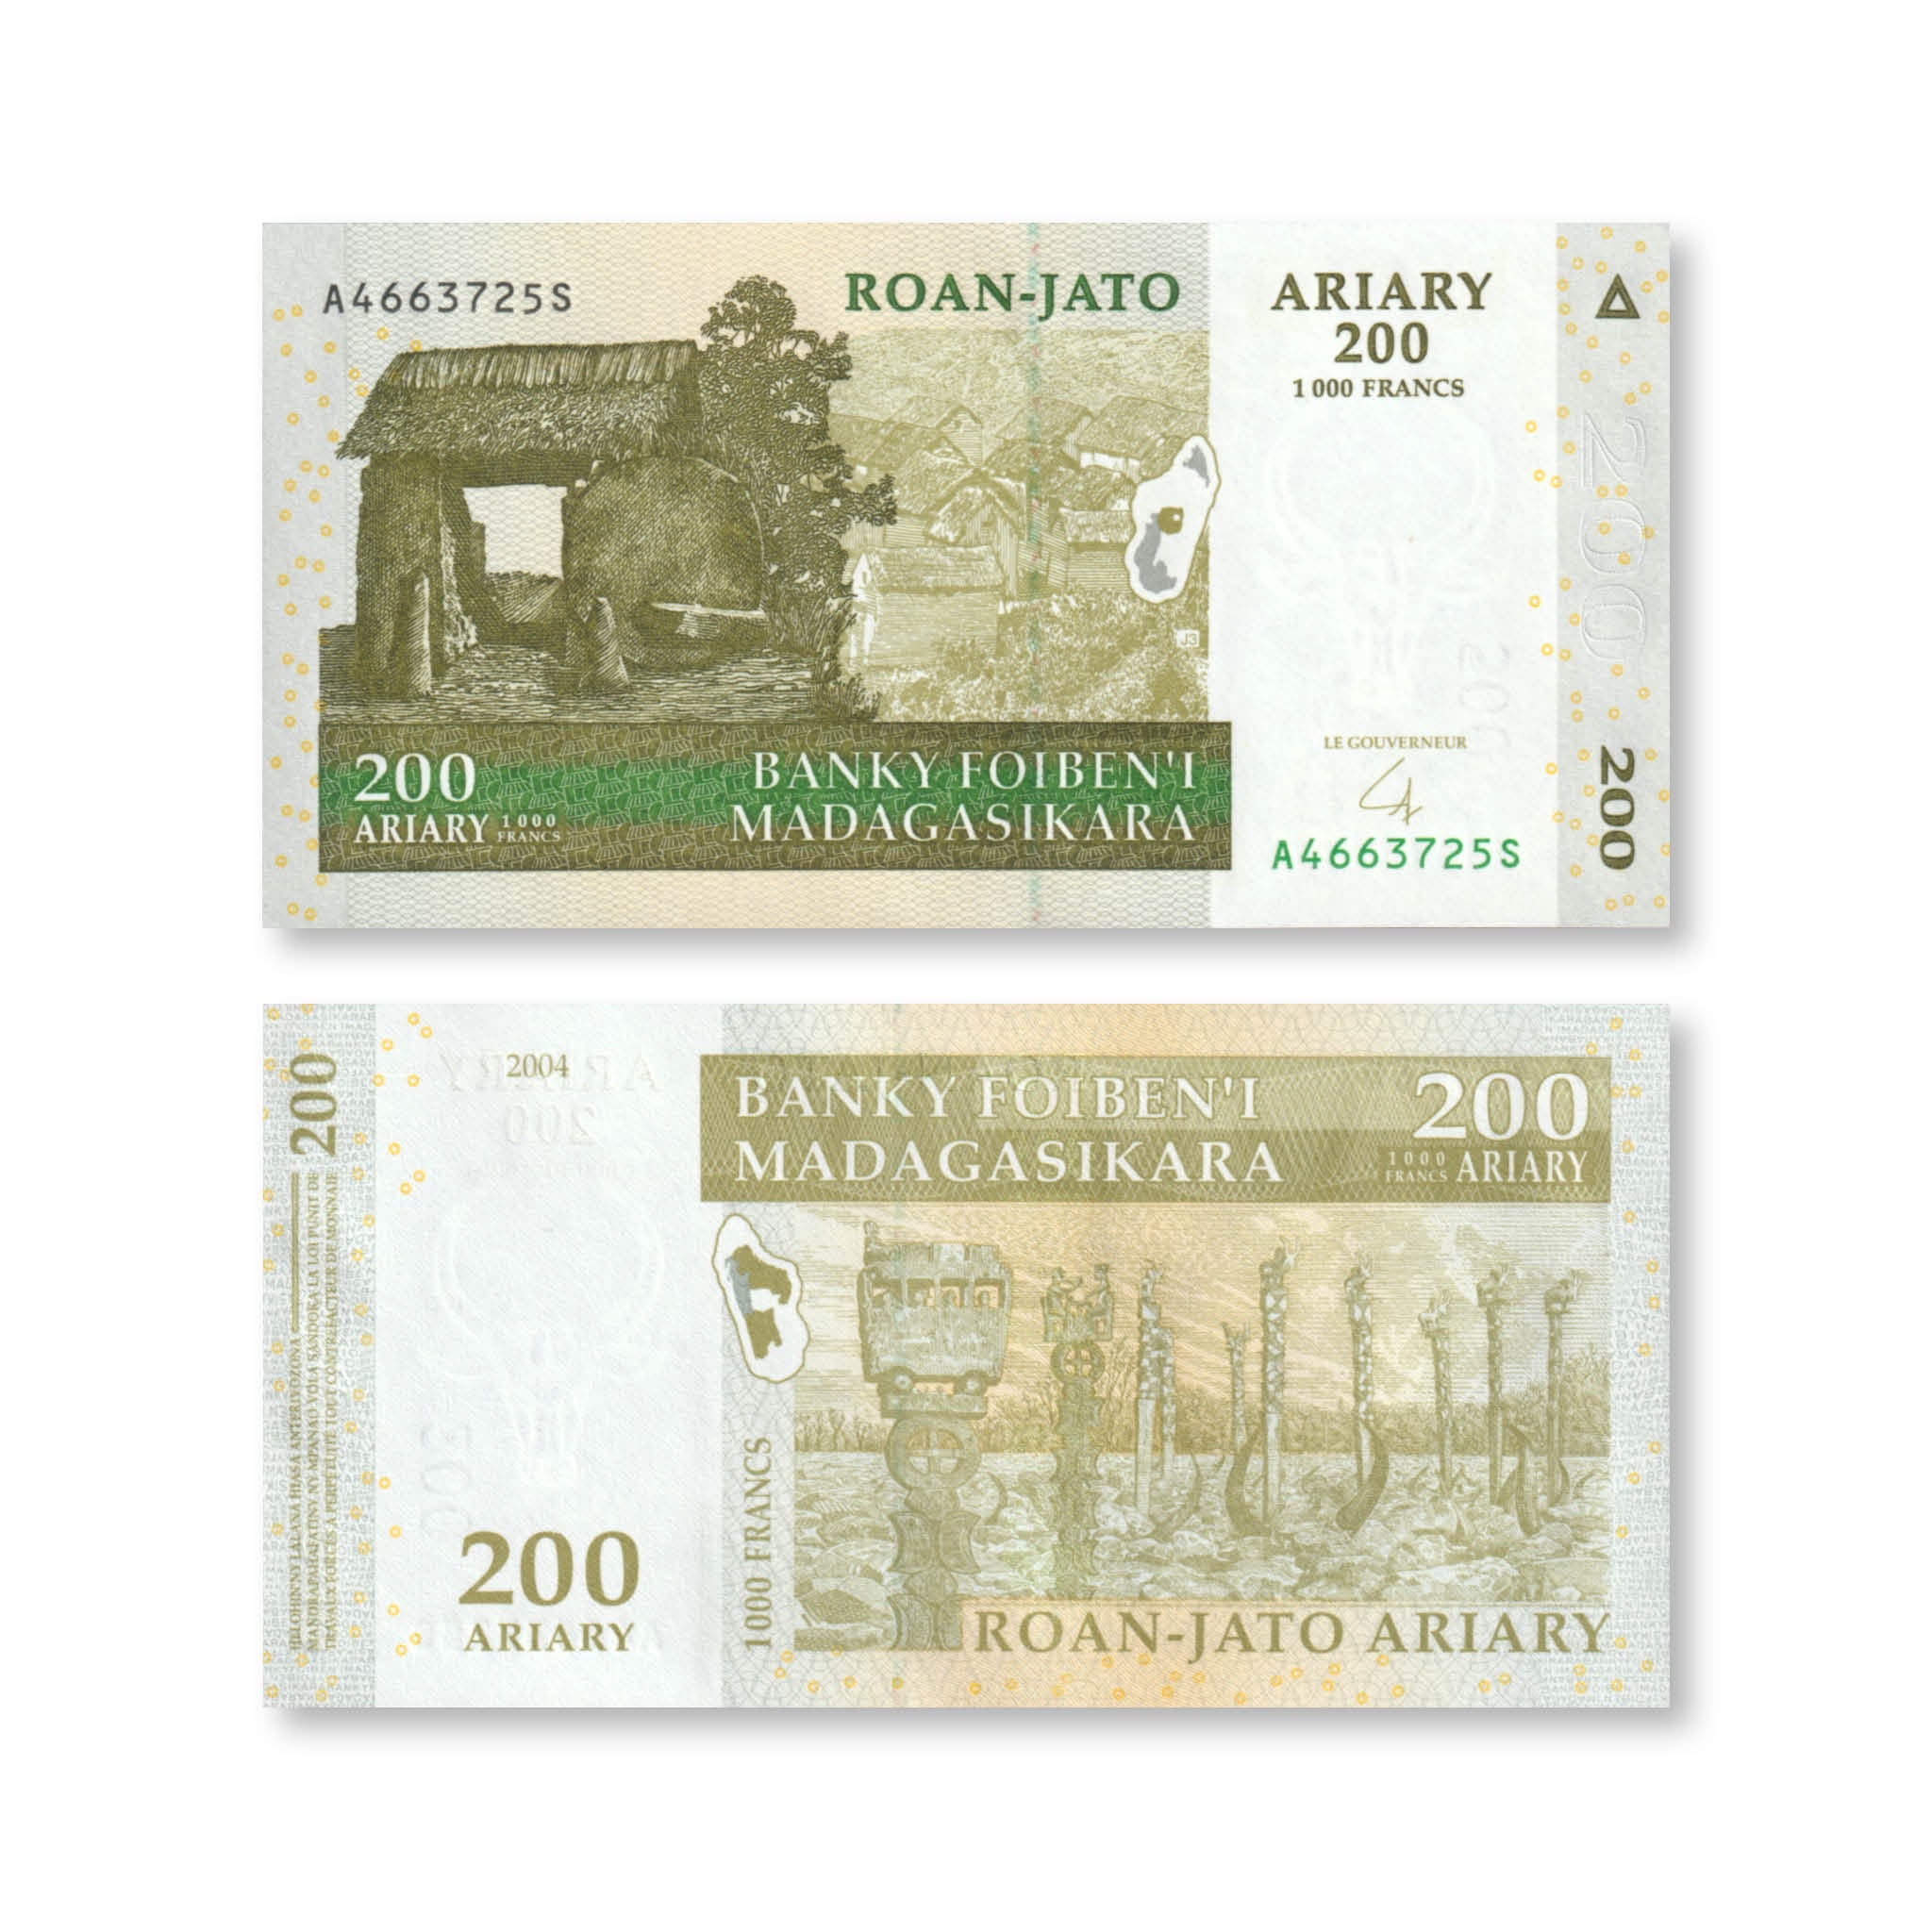 Madagascar 200 Ariary, 2004 (2007), B321b, P87b, UNC - Robert's World Money - World Banknotes